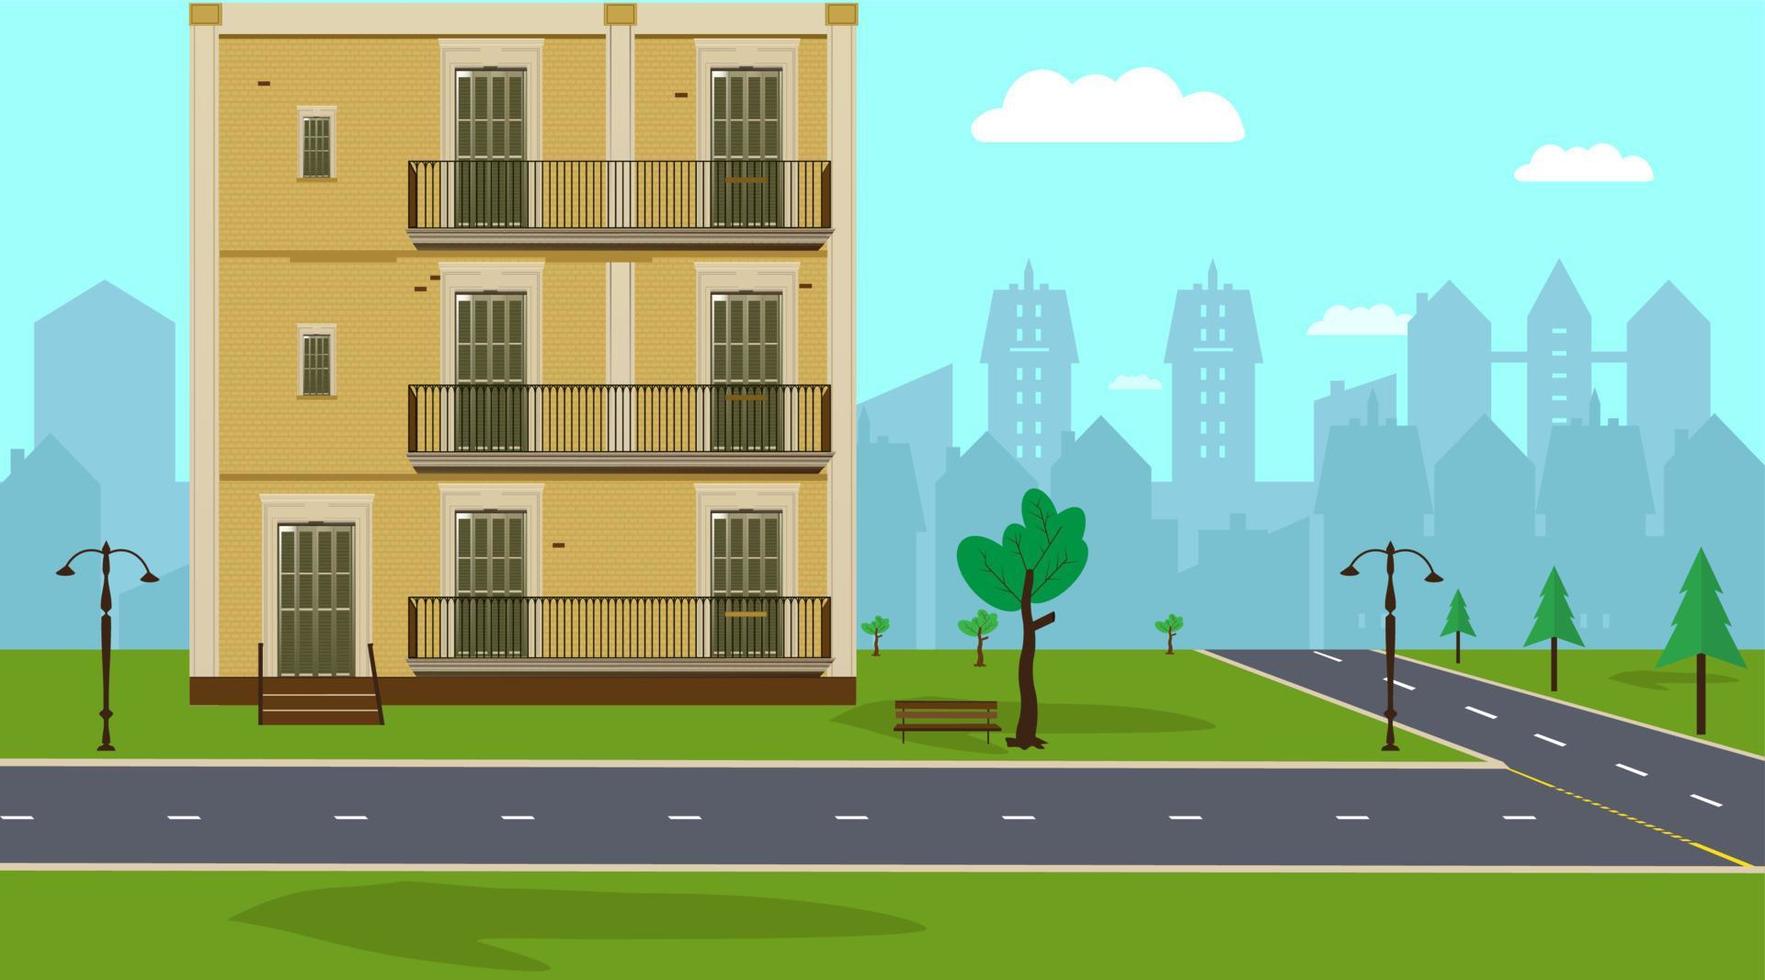 City Illustration, Building illustration with green tree vector